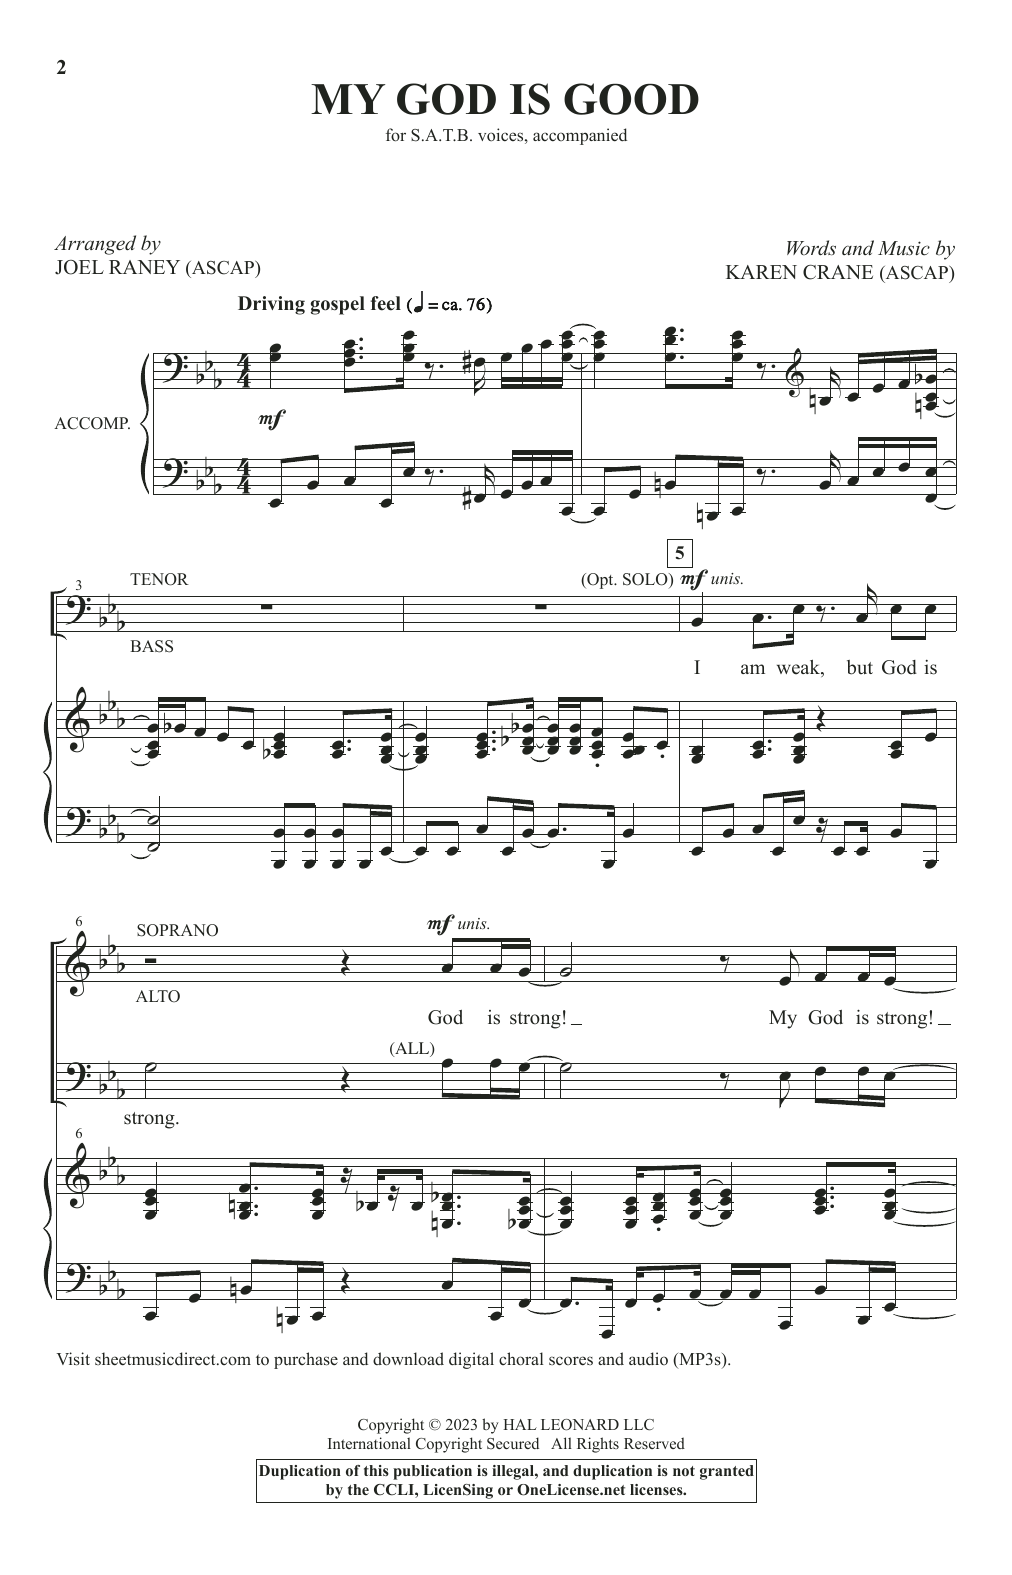 Karen Crane My God Is Good (arr. Joel Raney) Sheet Music Notes & Chords for SATB Choir - Download or Print PDF